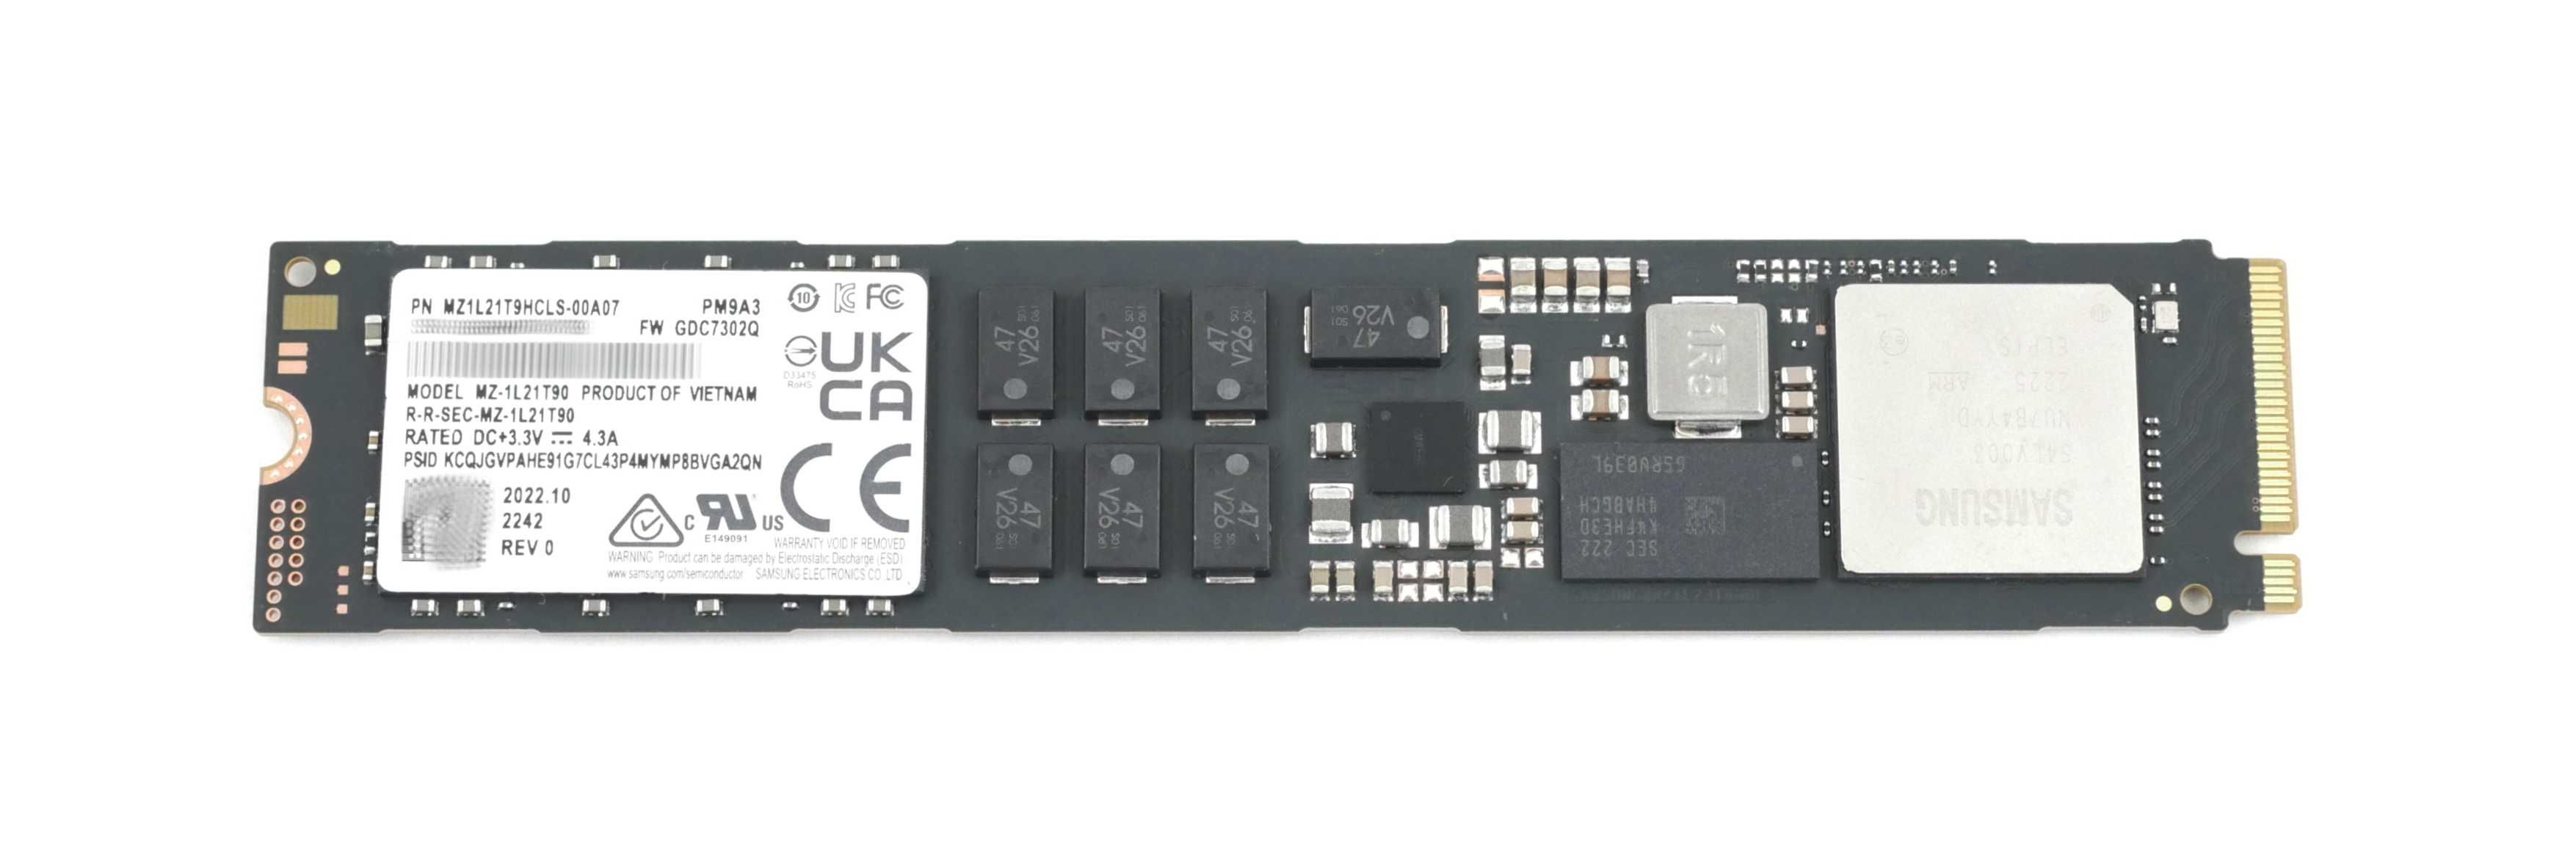 Samsung 1.92TB MZ1L21T9HCLS SSD M.2 22110 PCIe 4.0 x4 NVMe PM9A3 - Click Image to Close